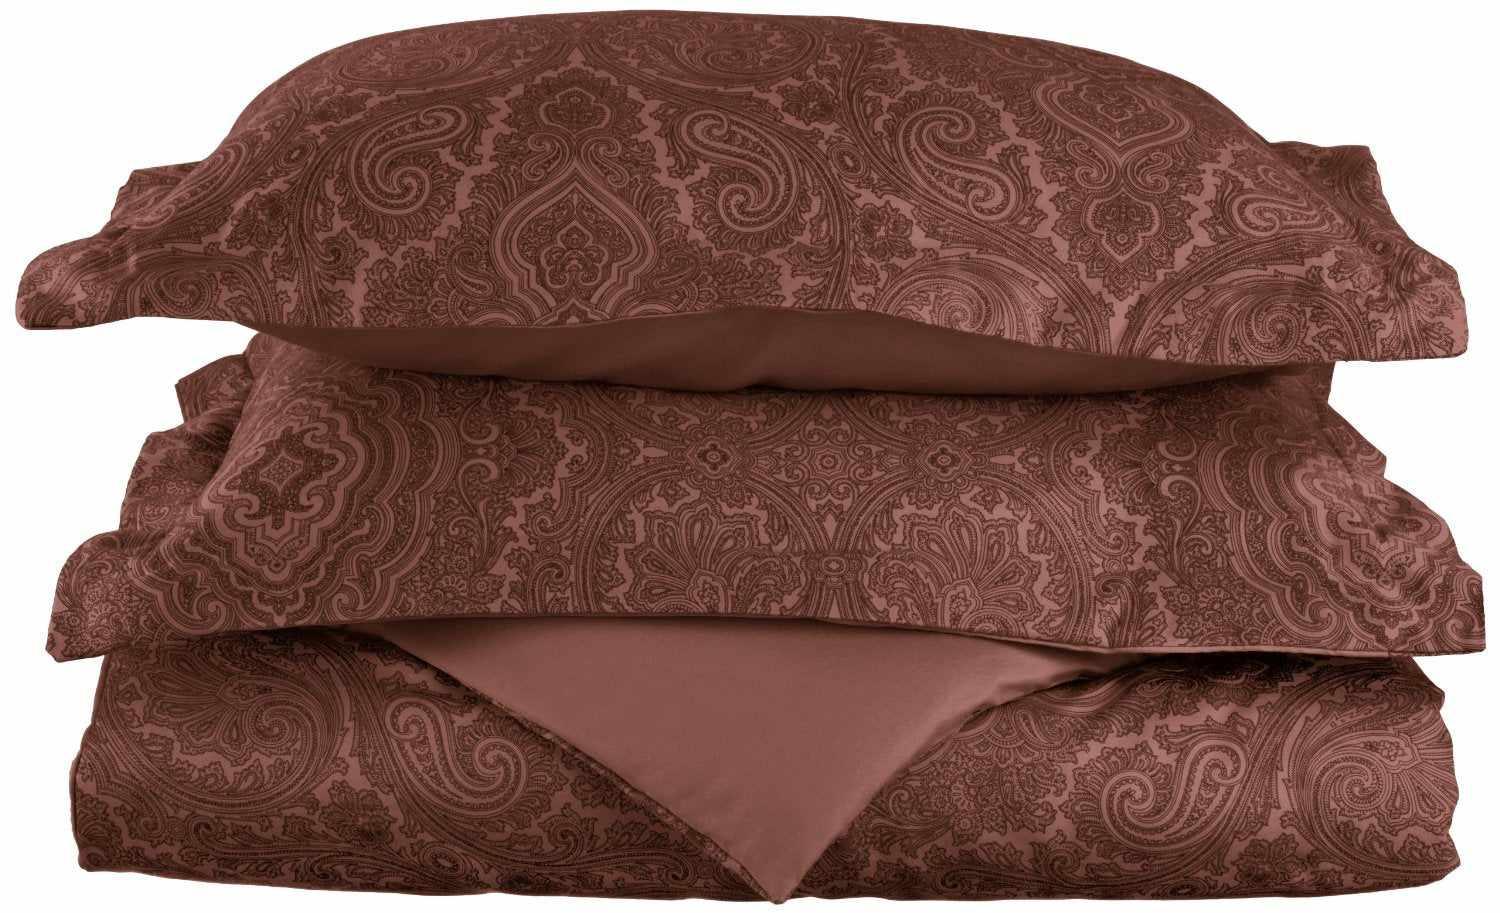  Superior Italian Paisley Cotton Blend Duvet Cover Set - Chocolate